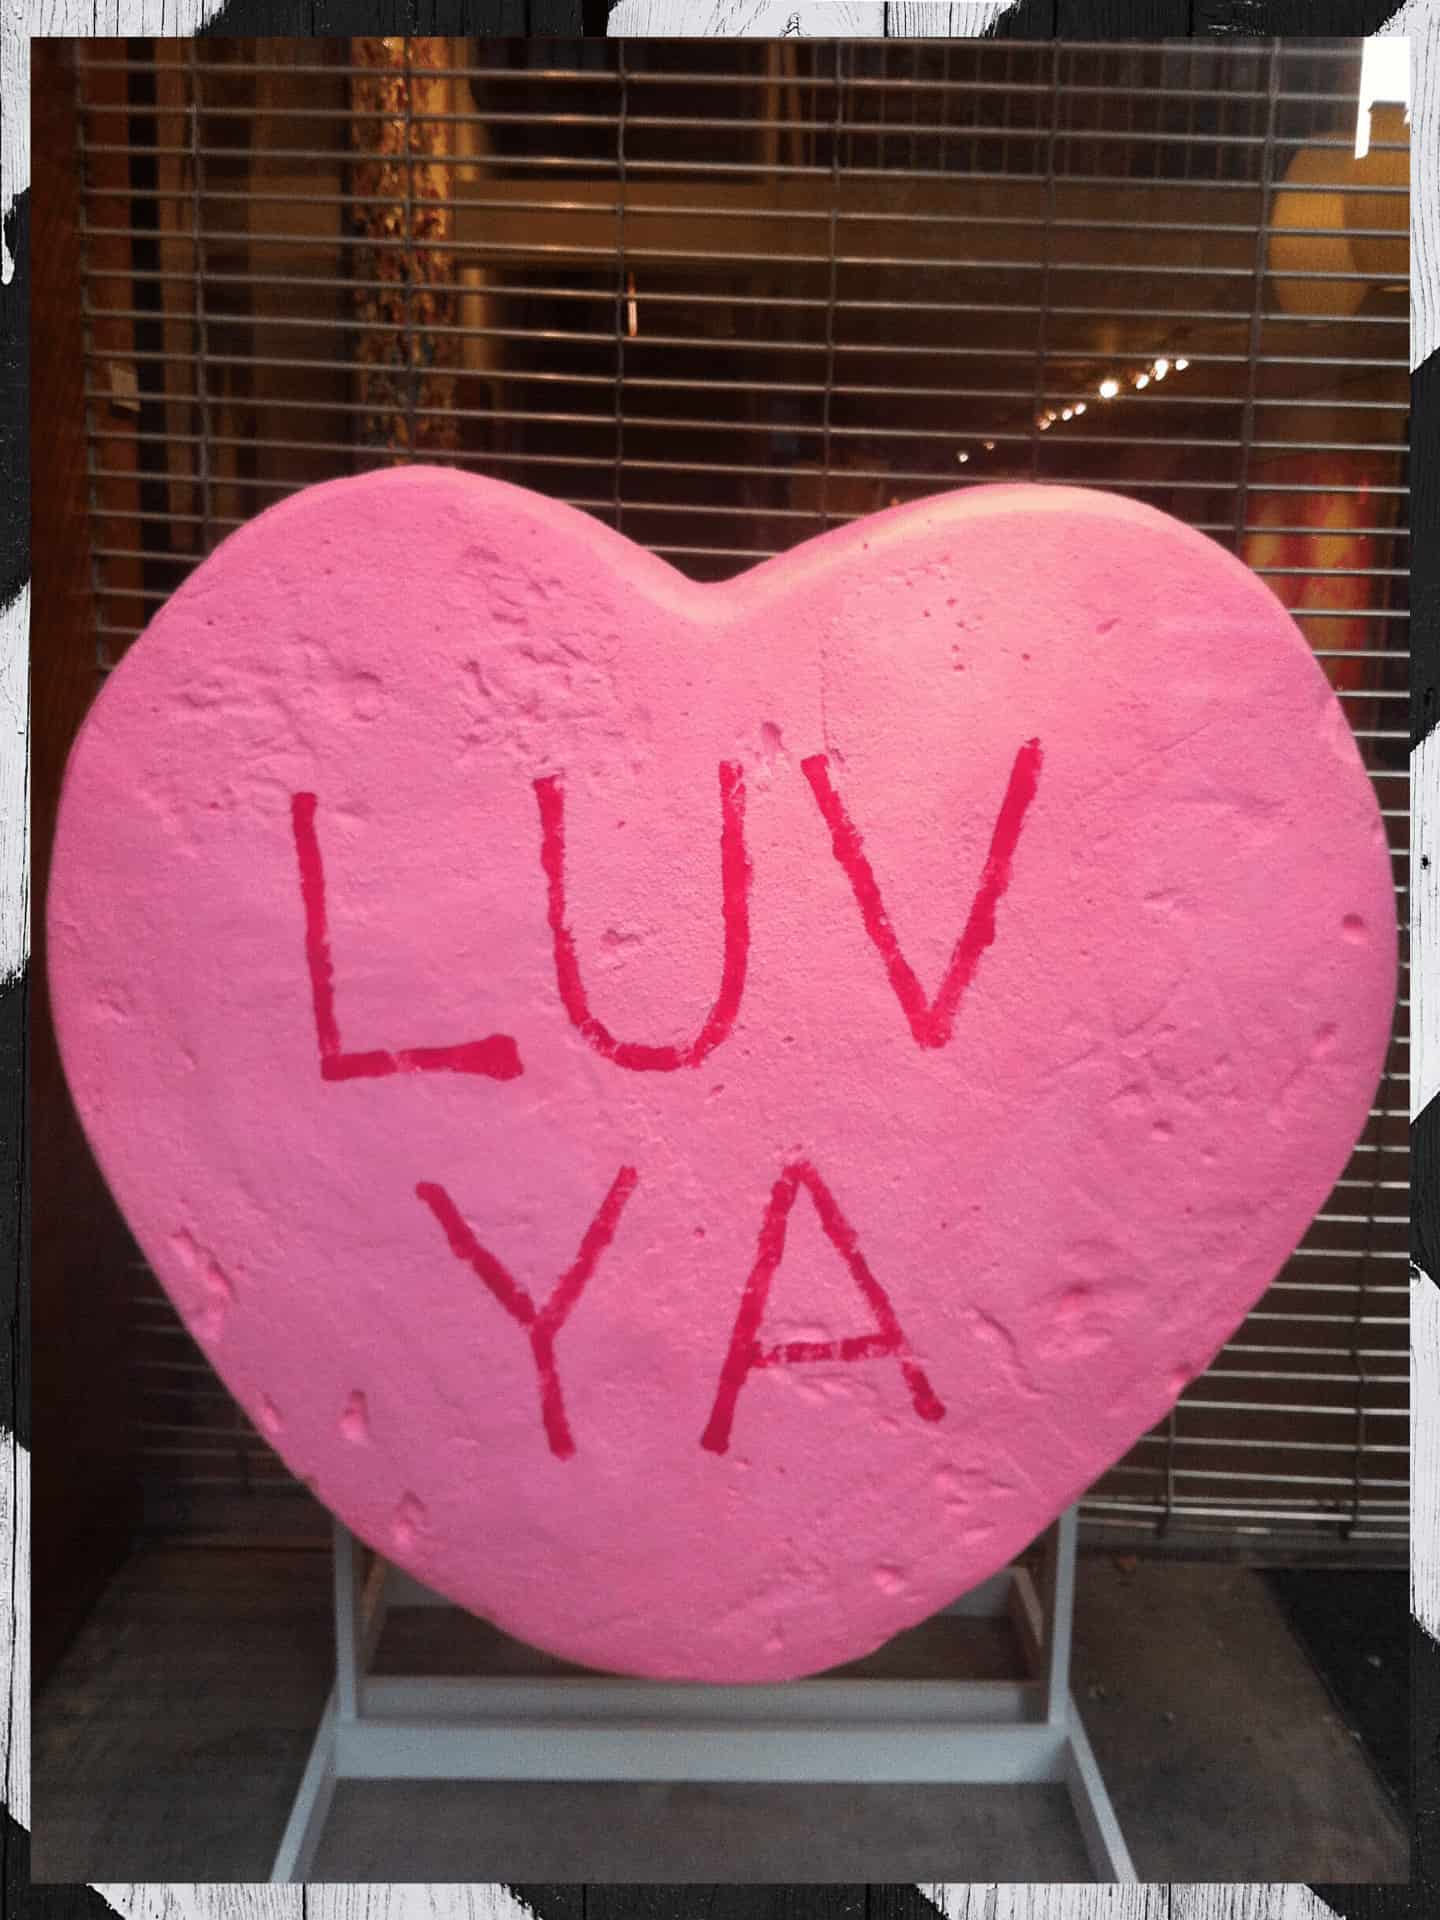 Luv Ya Heart - NYC Gallery